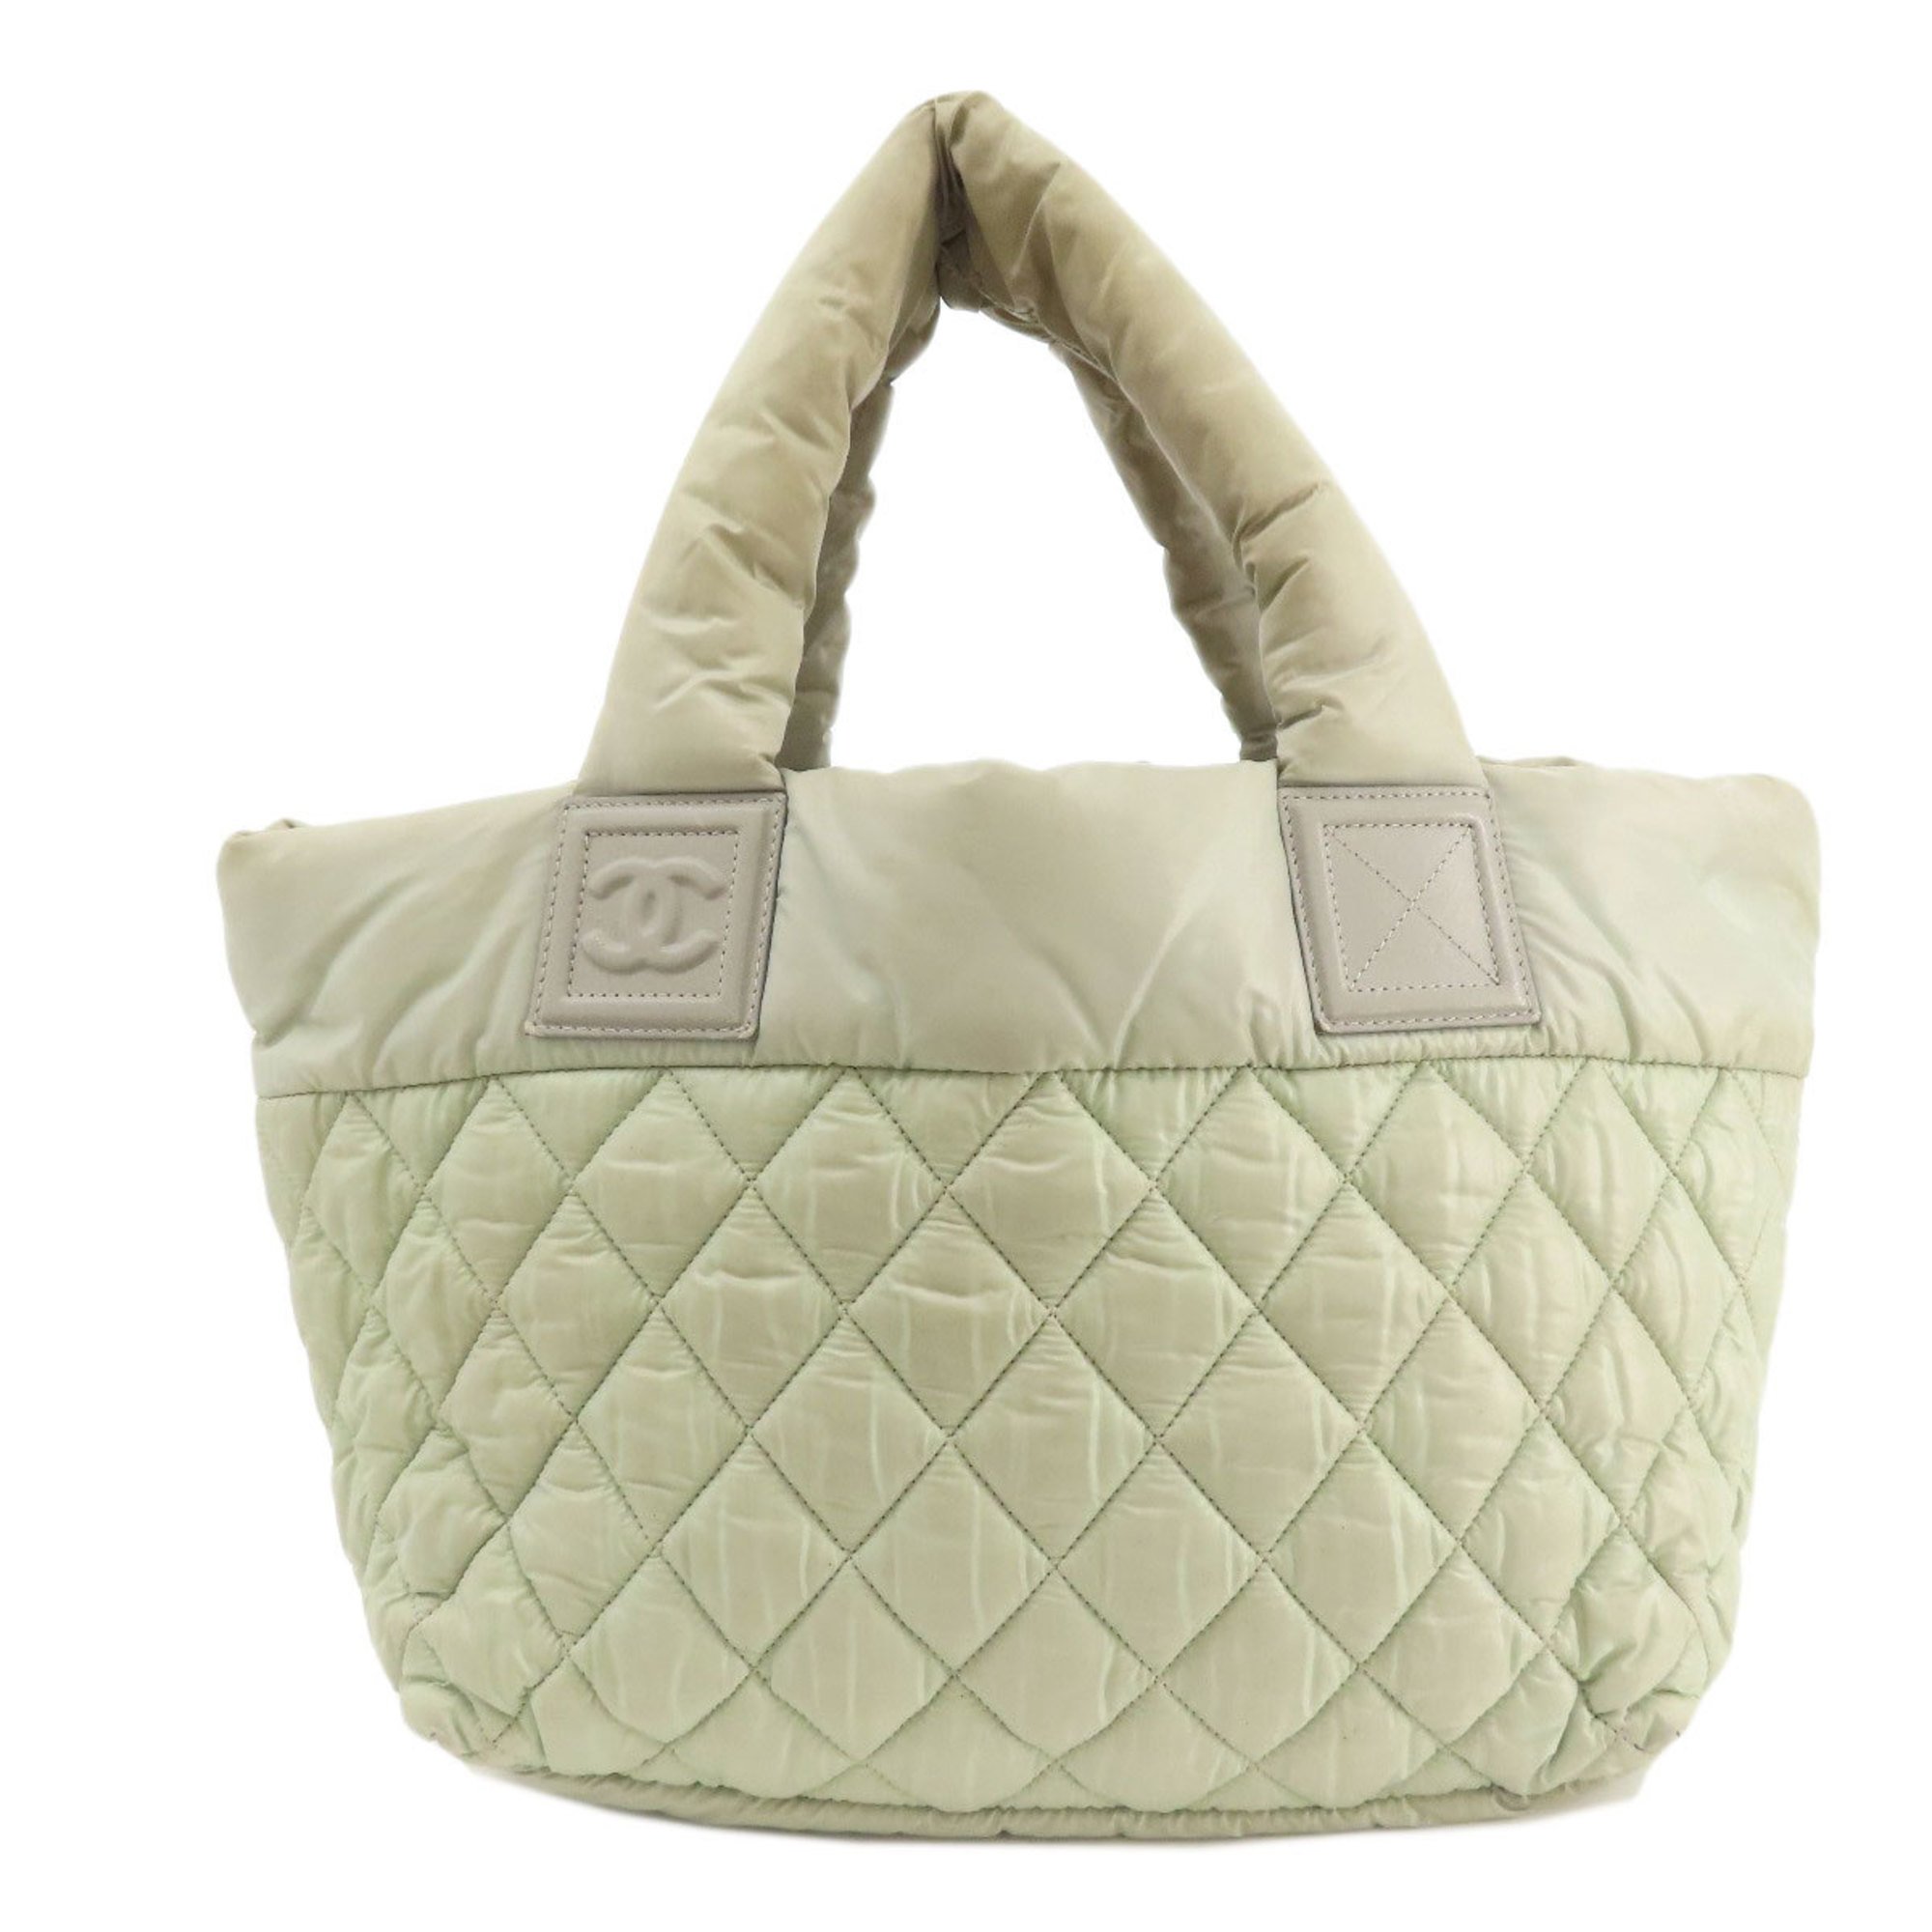 Chanel Coco Cocoon Tote Bag Nylon Material Women's